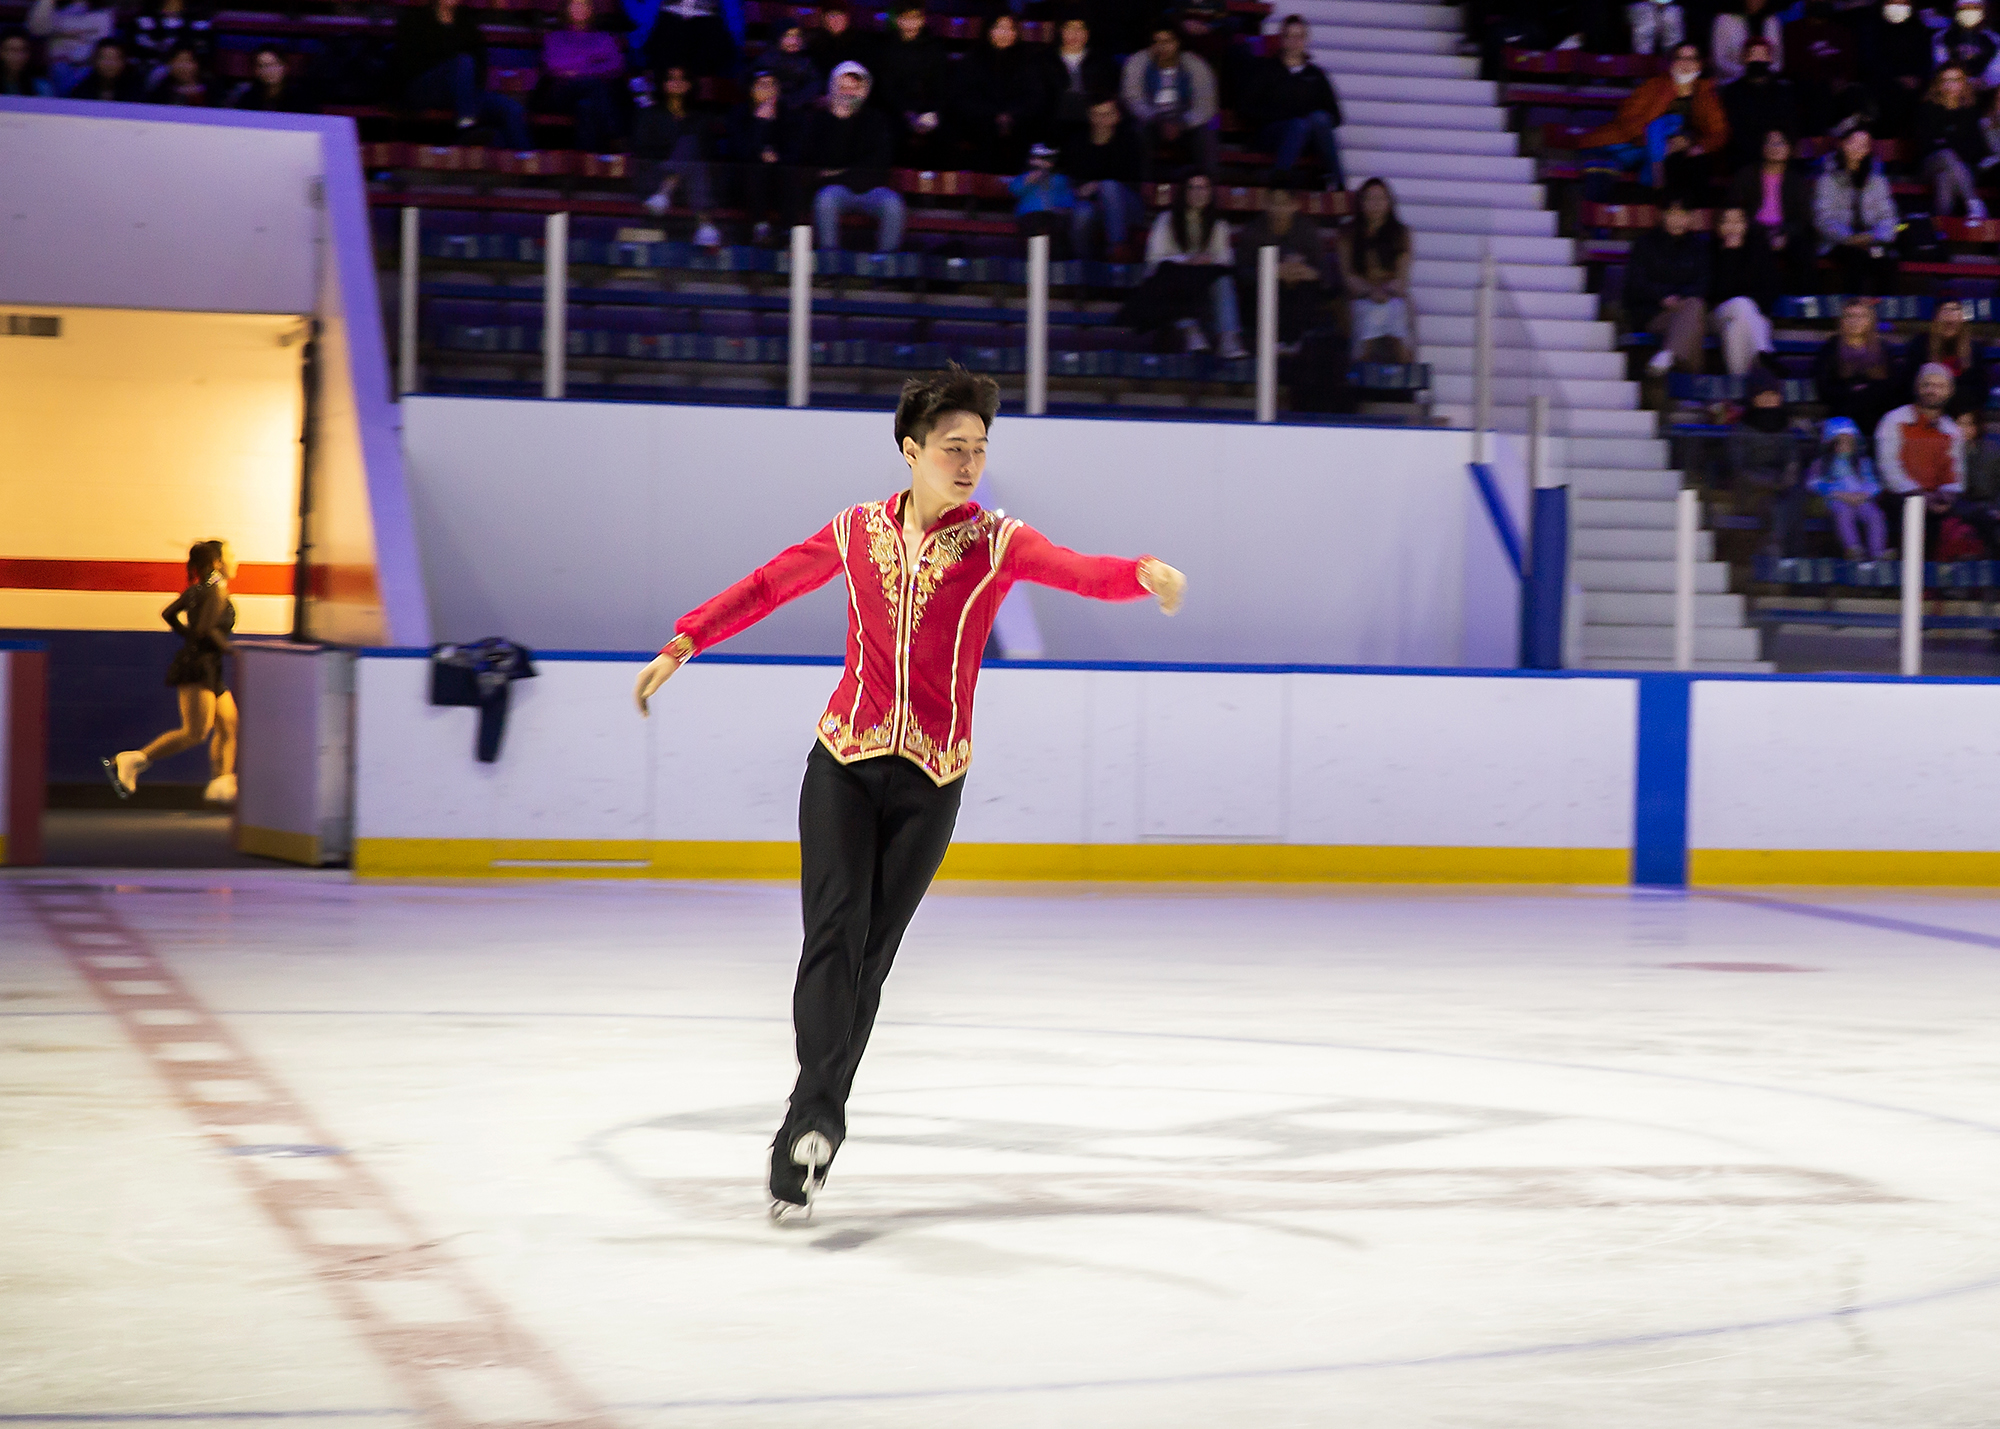 Elliot Jang performing The Nutcracker on ice.